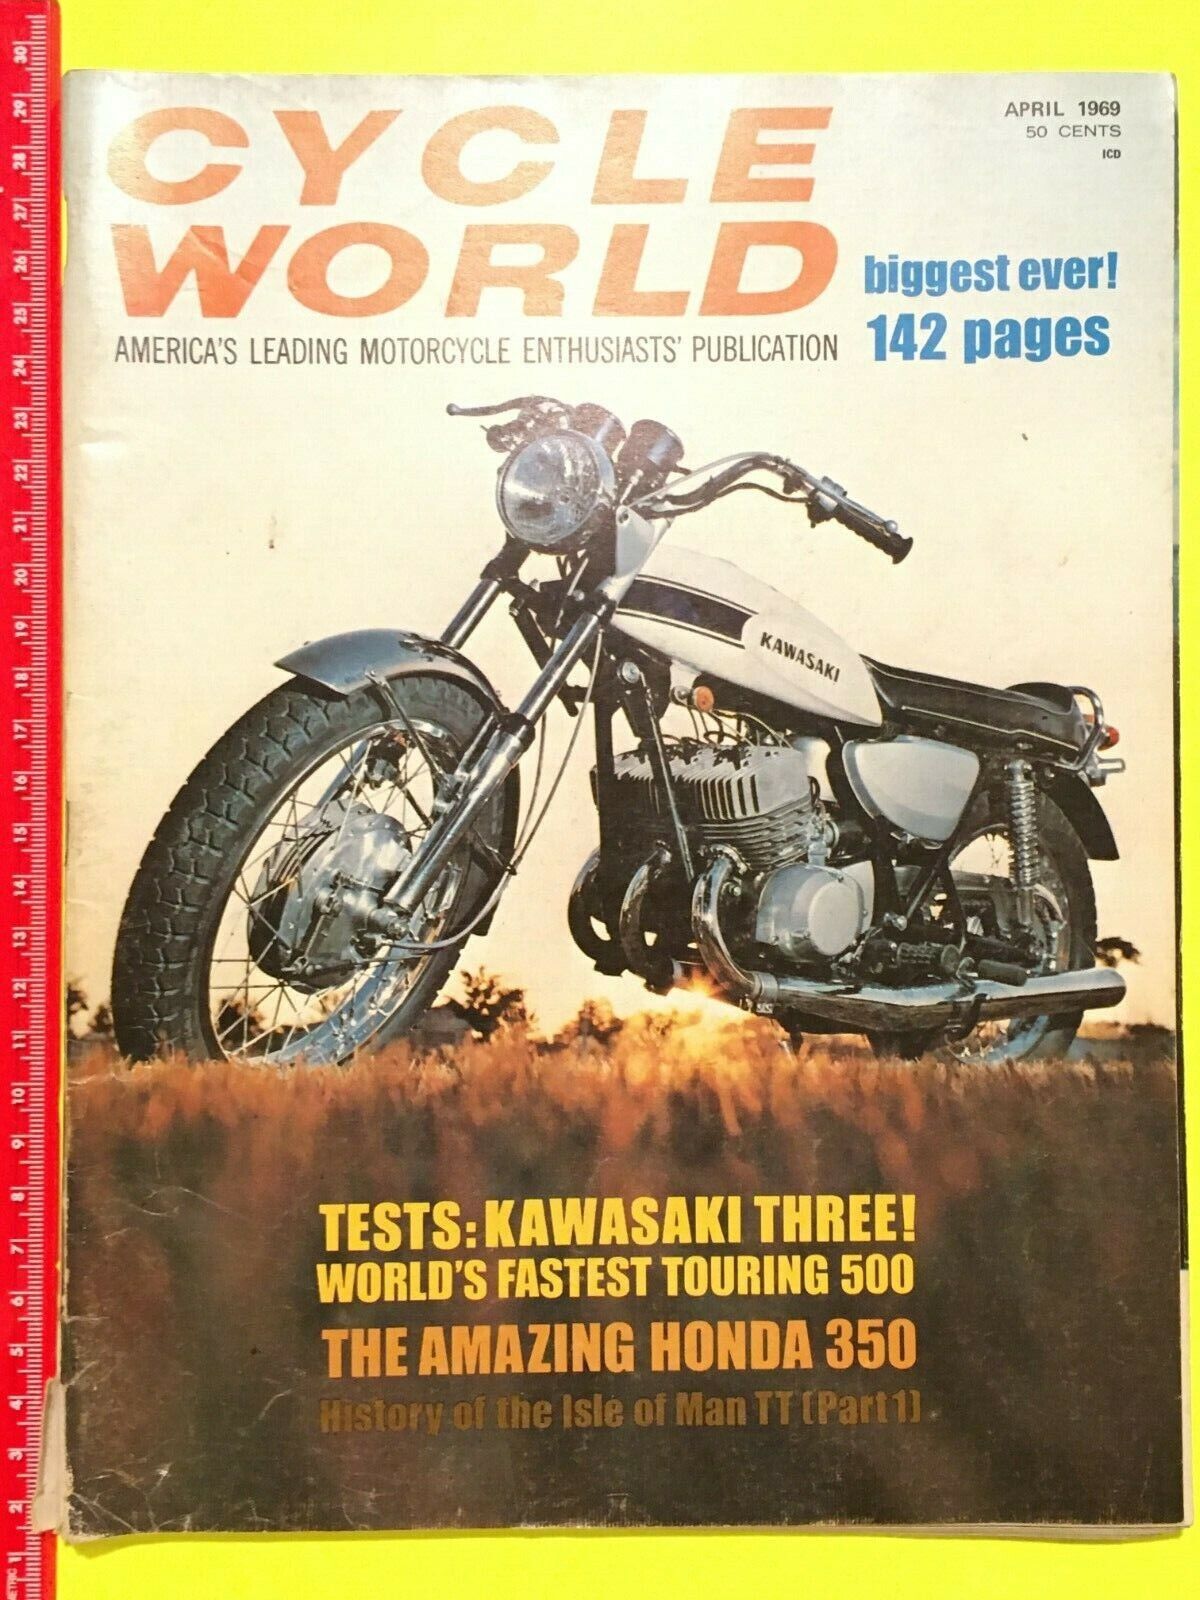 VINTAGE CYCLE WORLD MAGAZINE APRIL 1969 VOL 8 NUM 4 ~ KAWASAKI 500, LYNX, HONDA